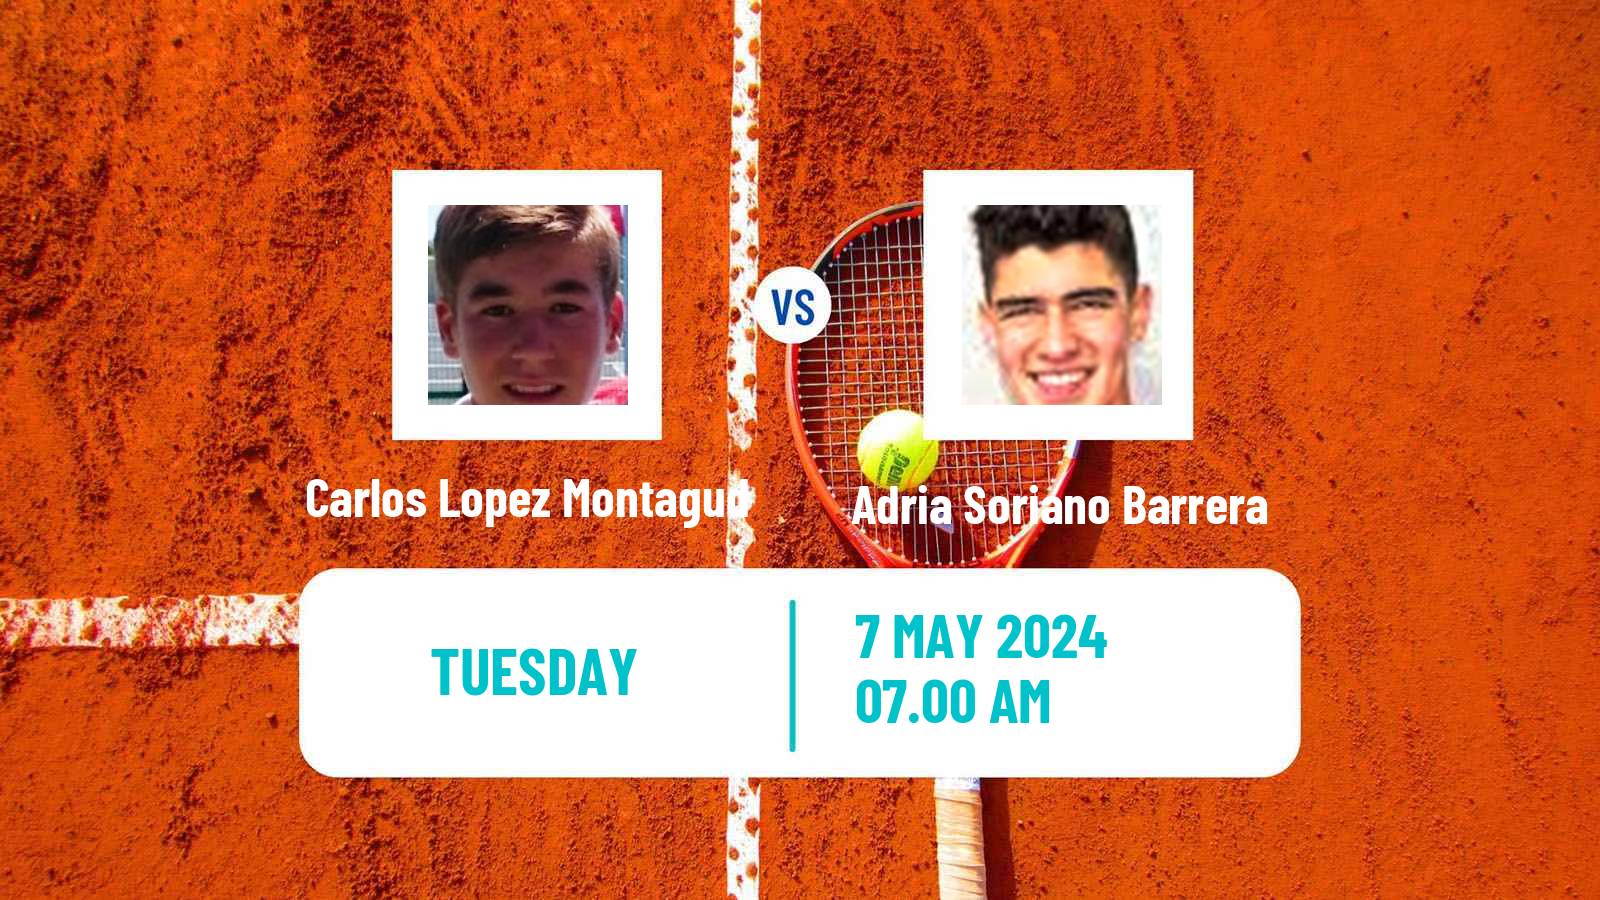 Tennis ITF M25 Valldoreix Men Carlos Lopez Montagud - Adria Soriano Barrera